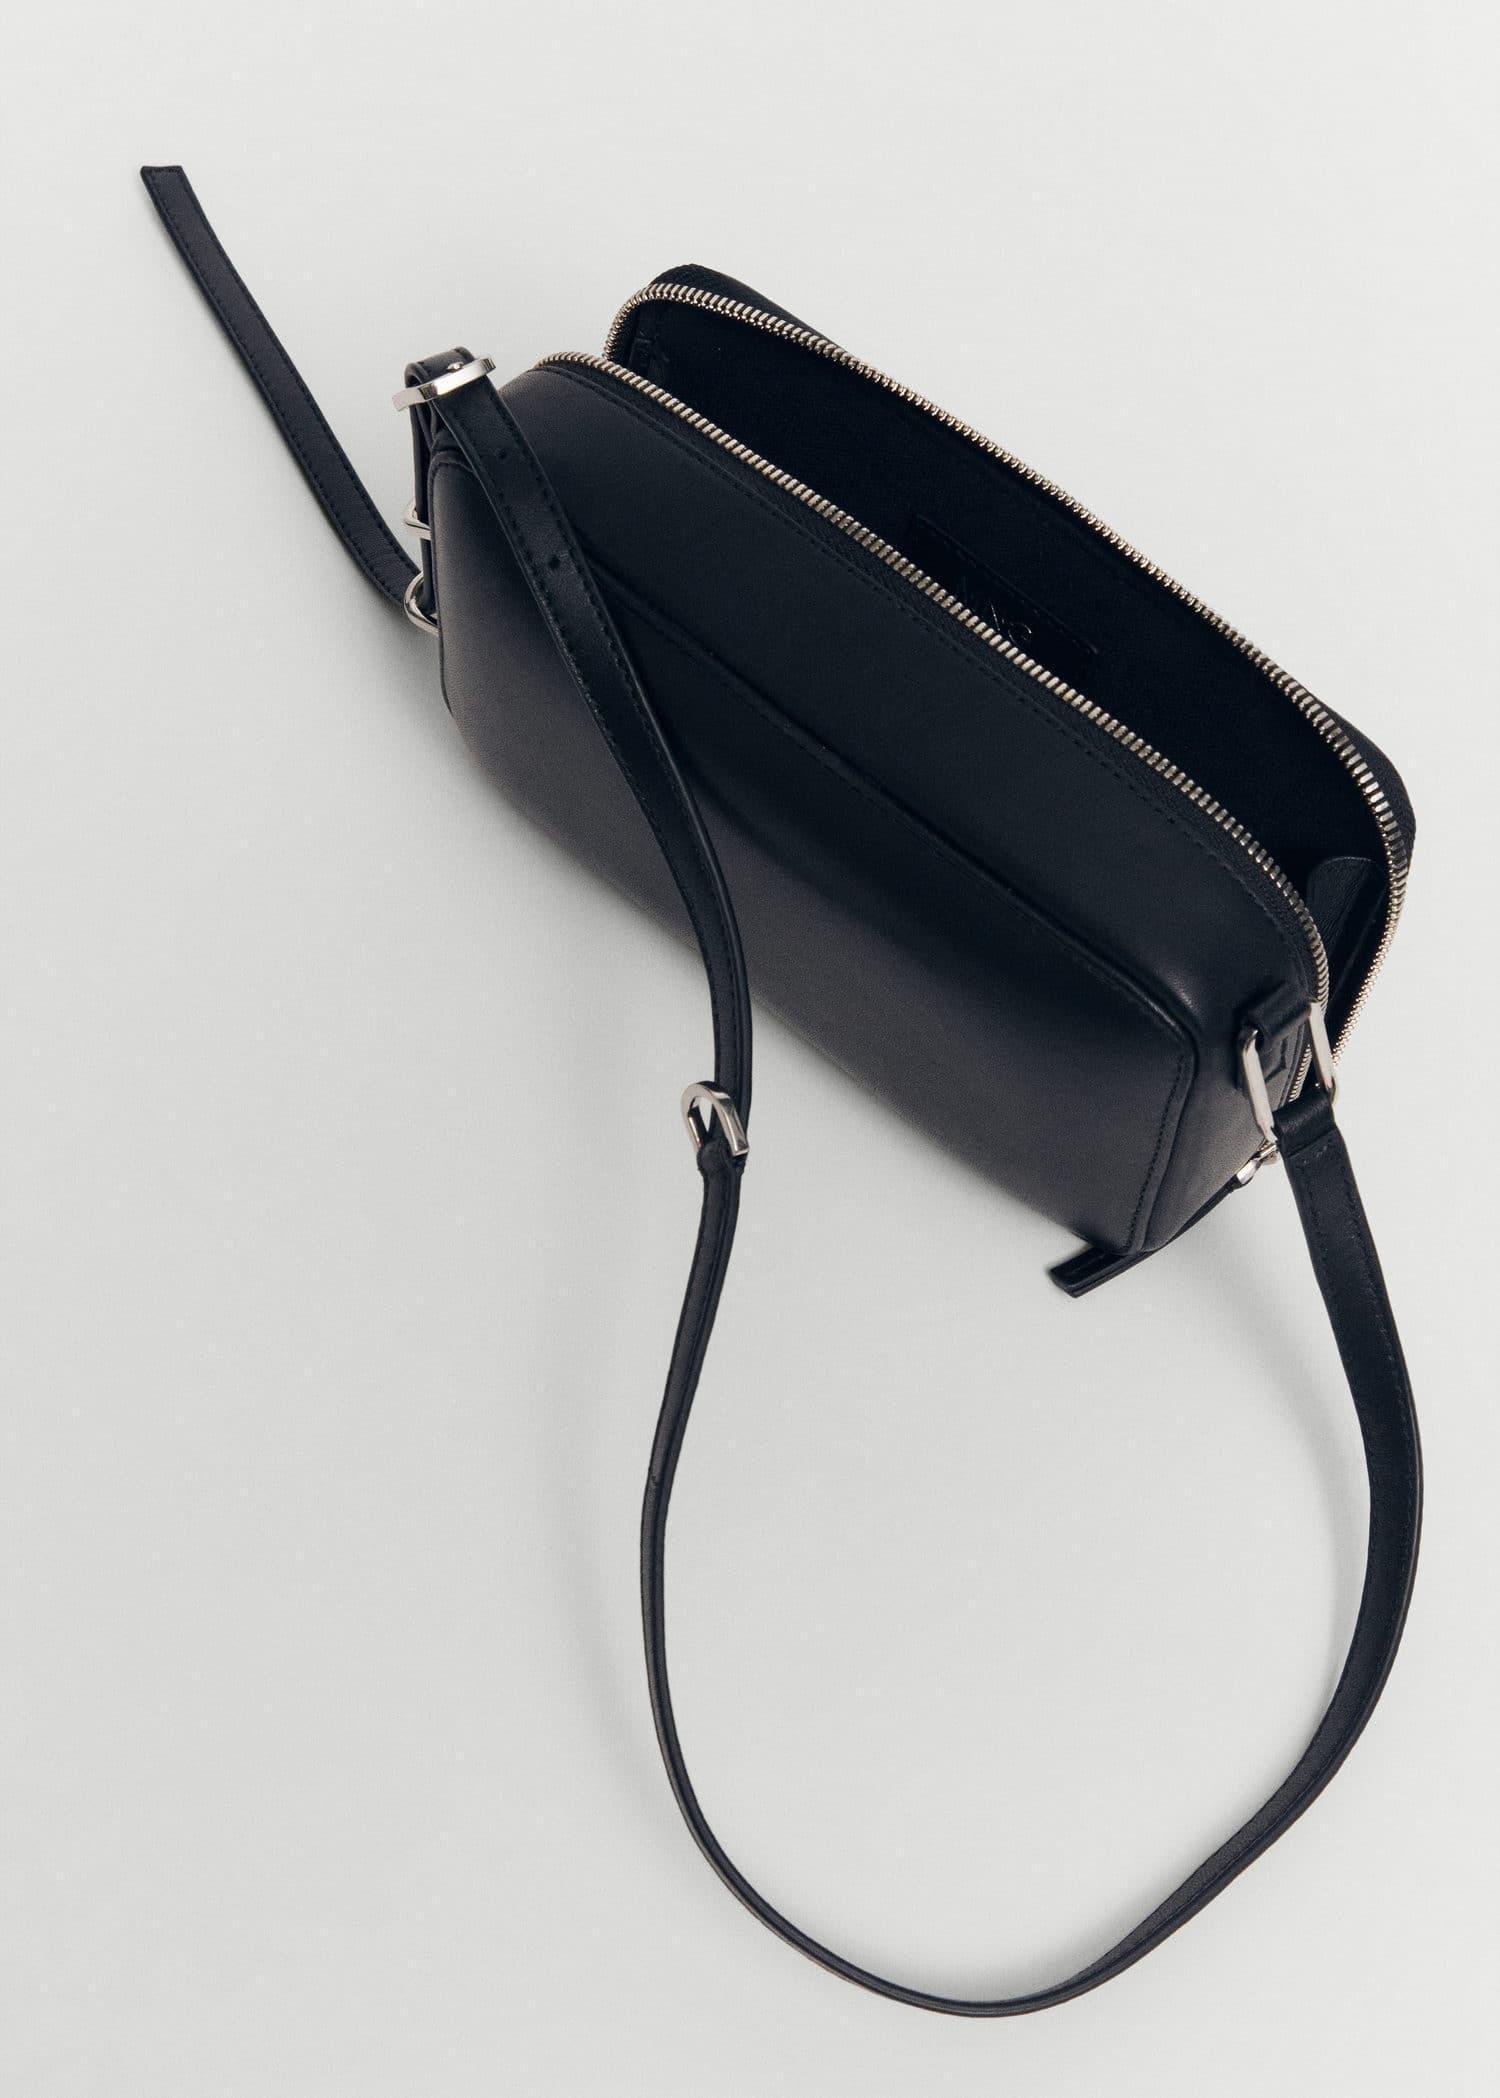 Mango - Black Rectangular Leather Handbag